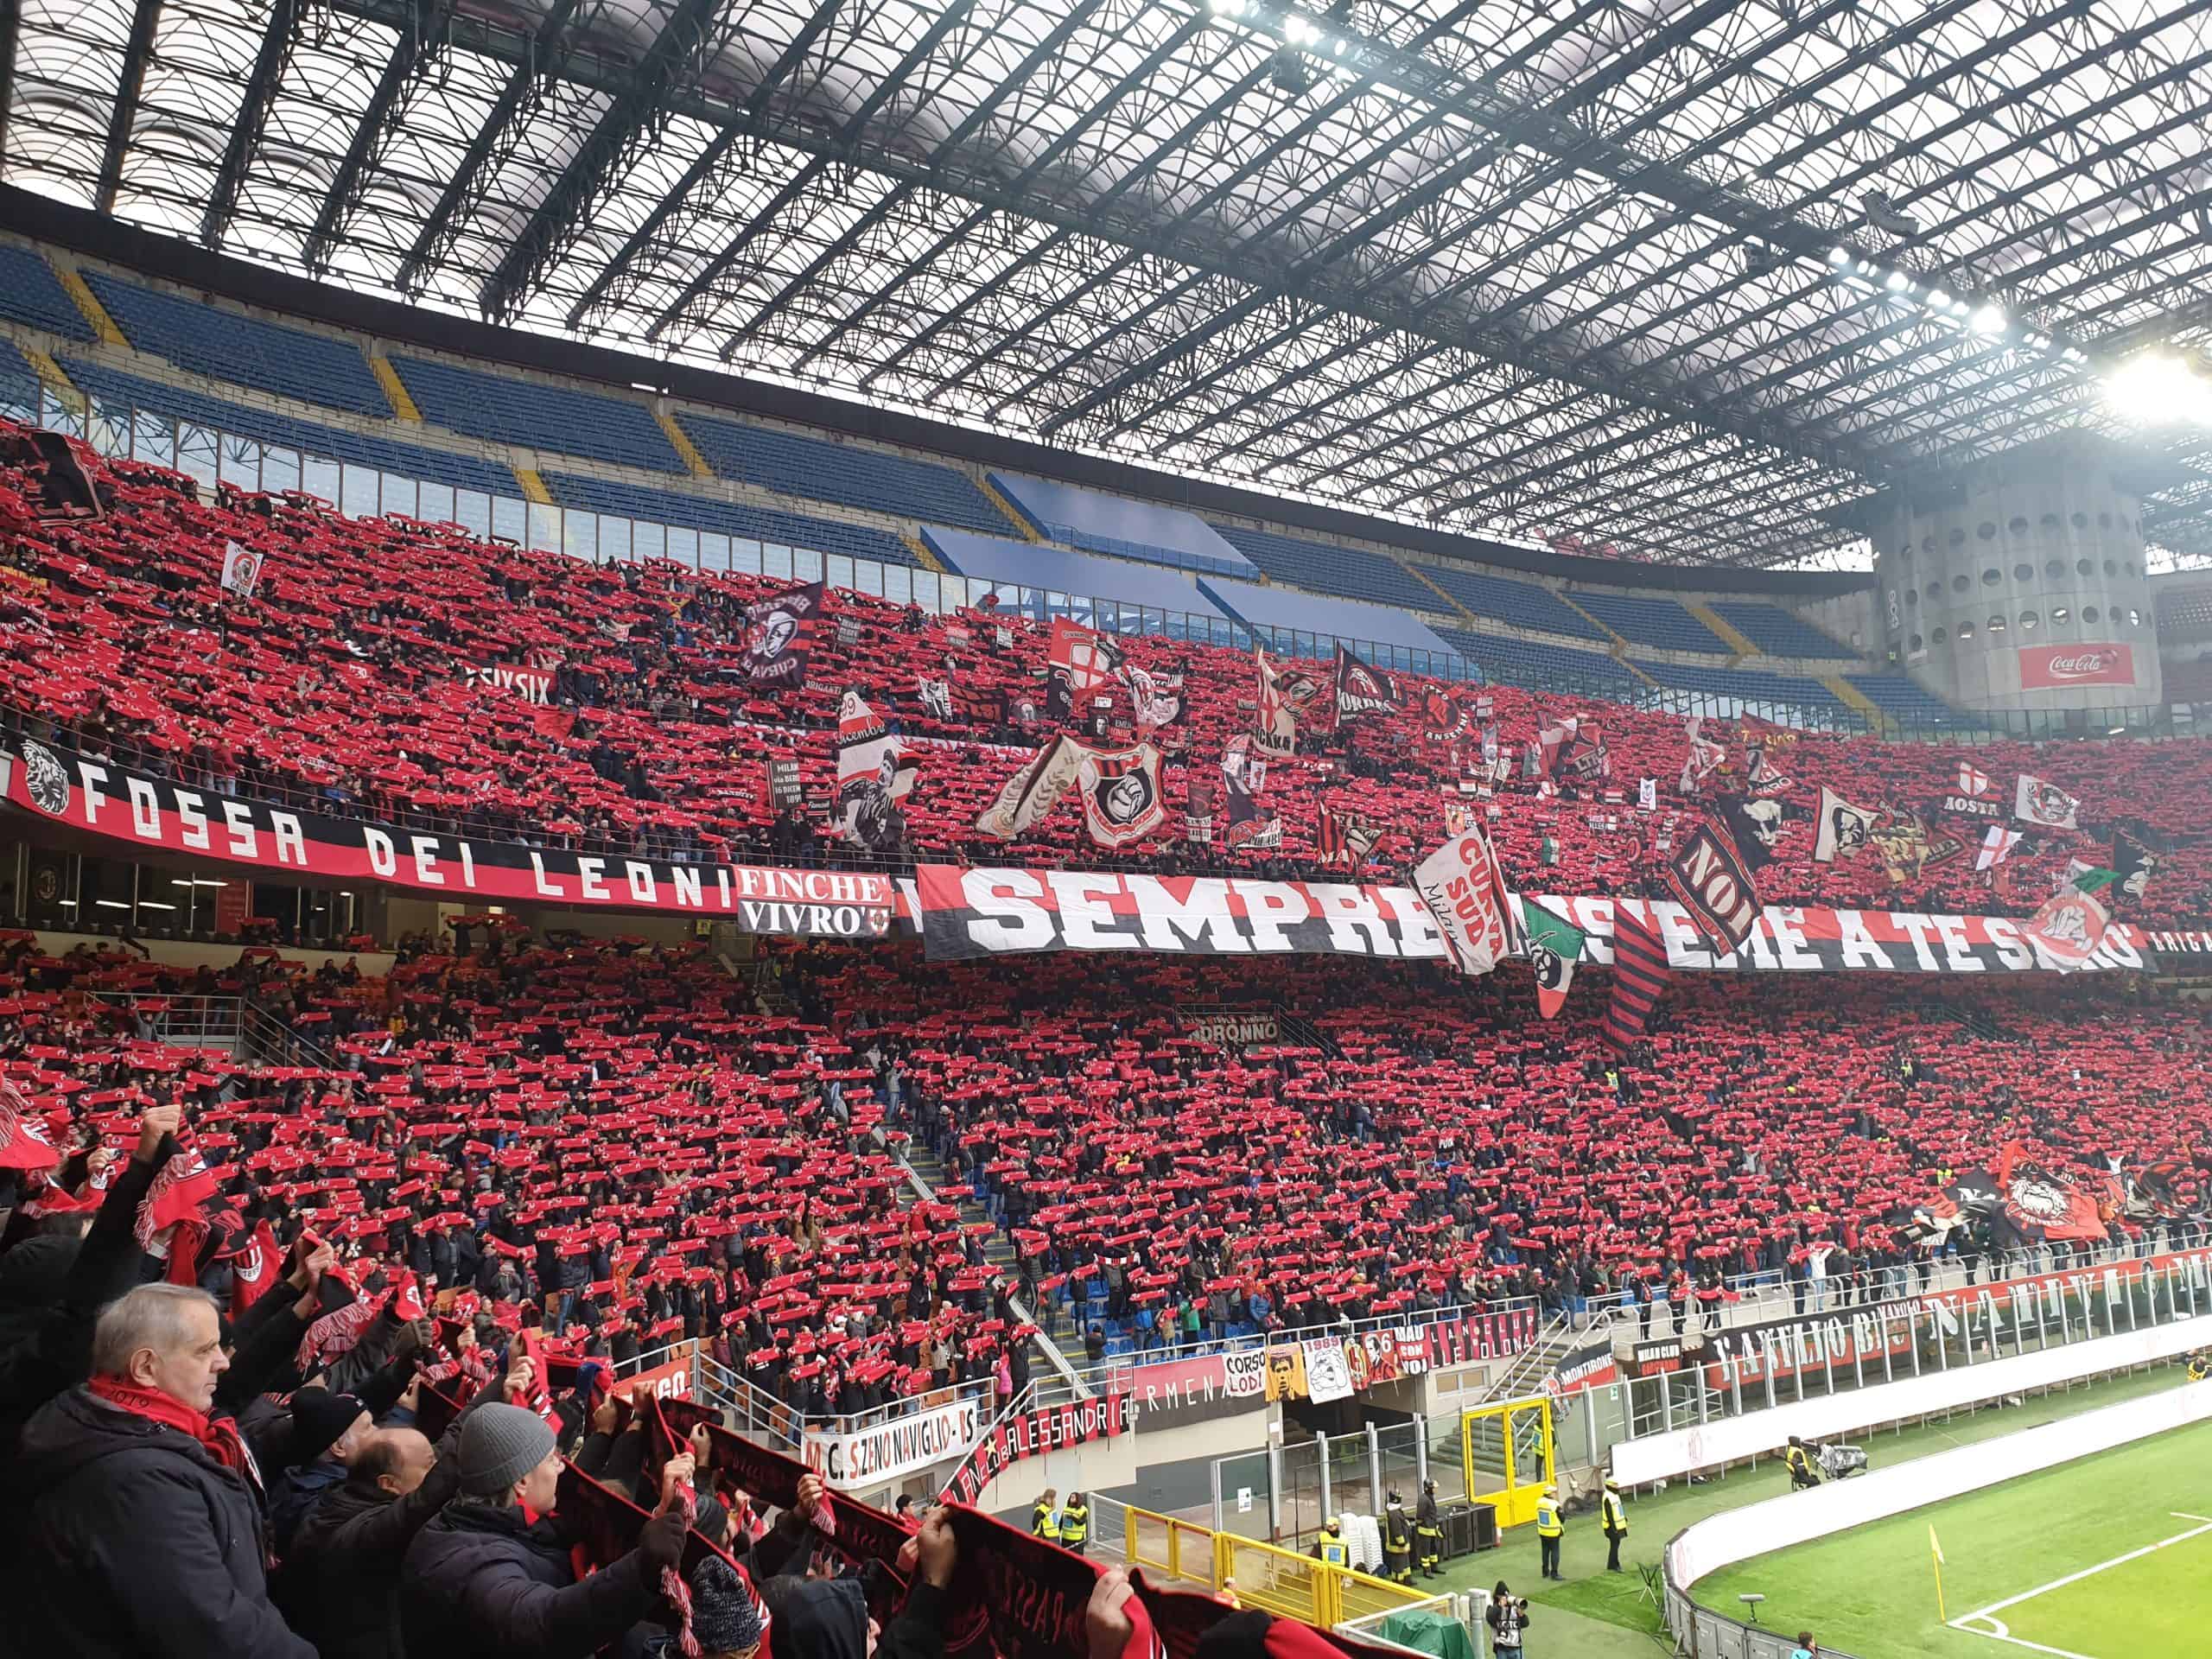 Derby Delle Lanterna: Stadio Luigi Ferraris Genoa Fans